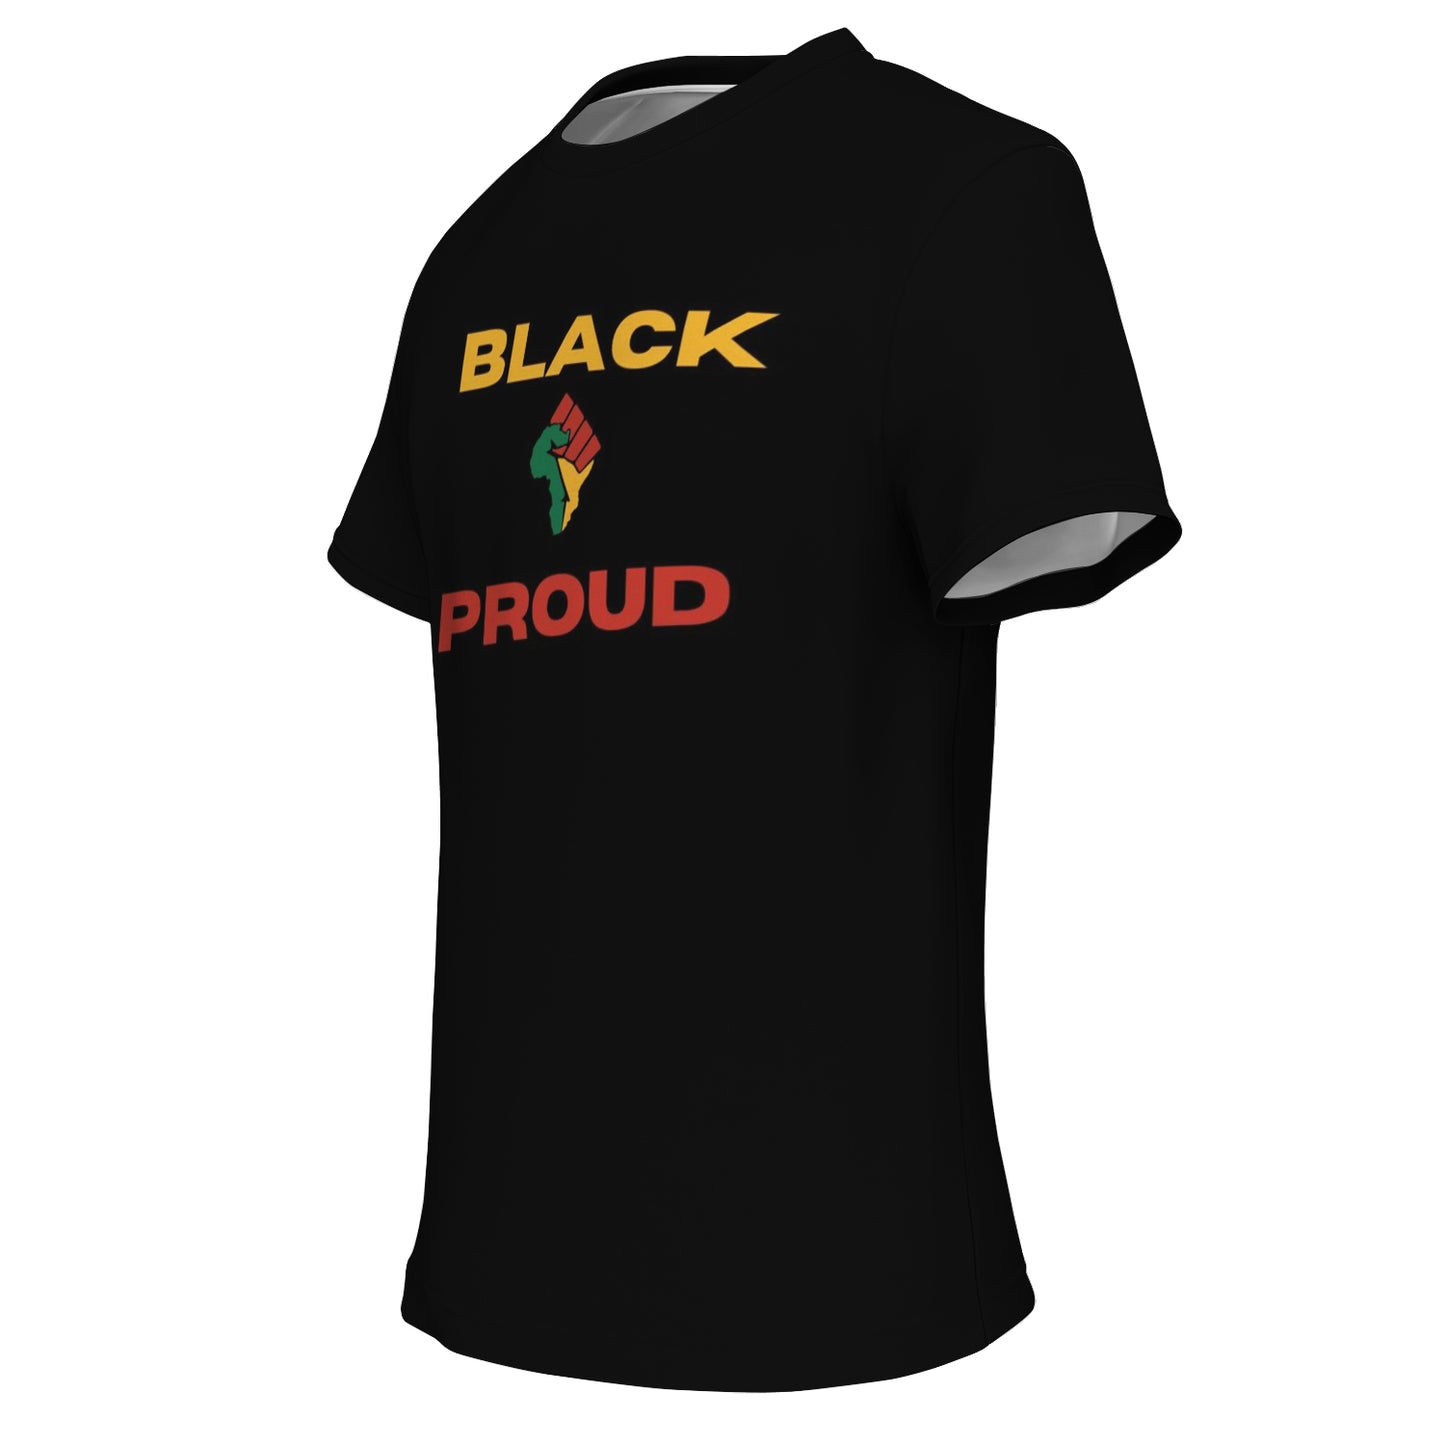 Black & Proud All Over Print (Black)